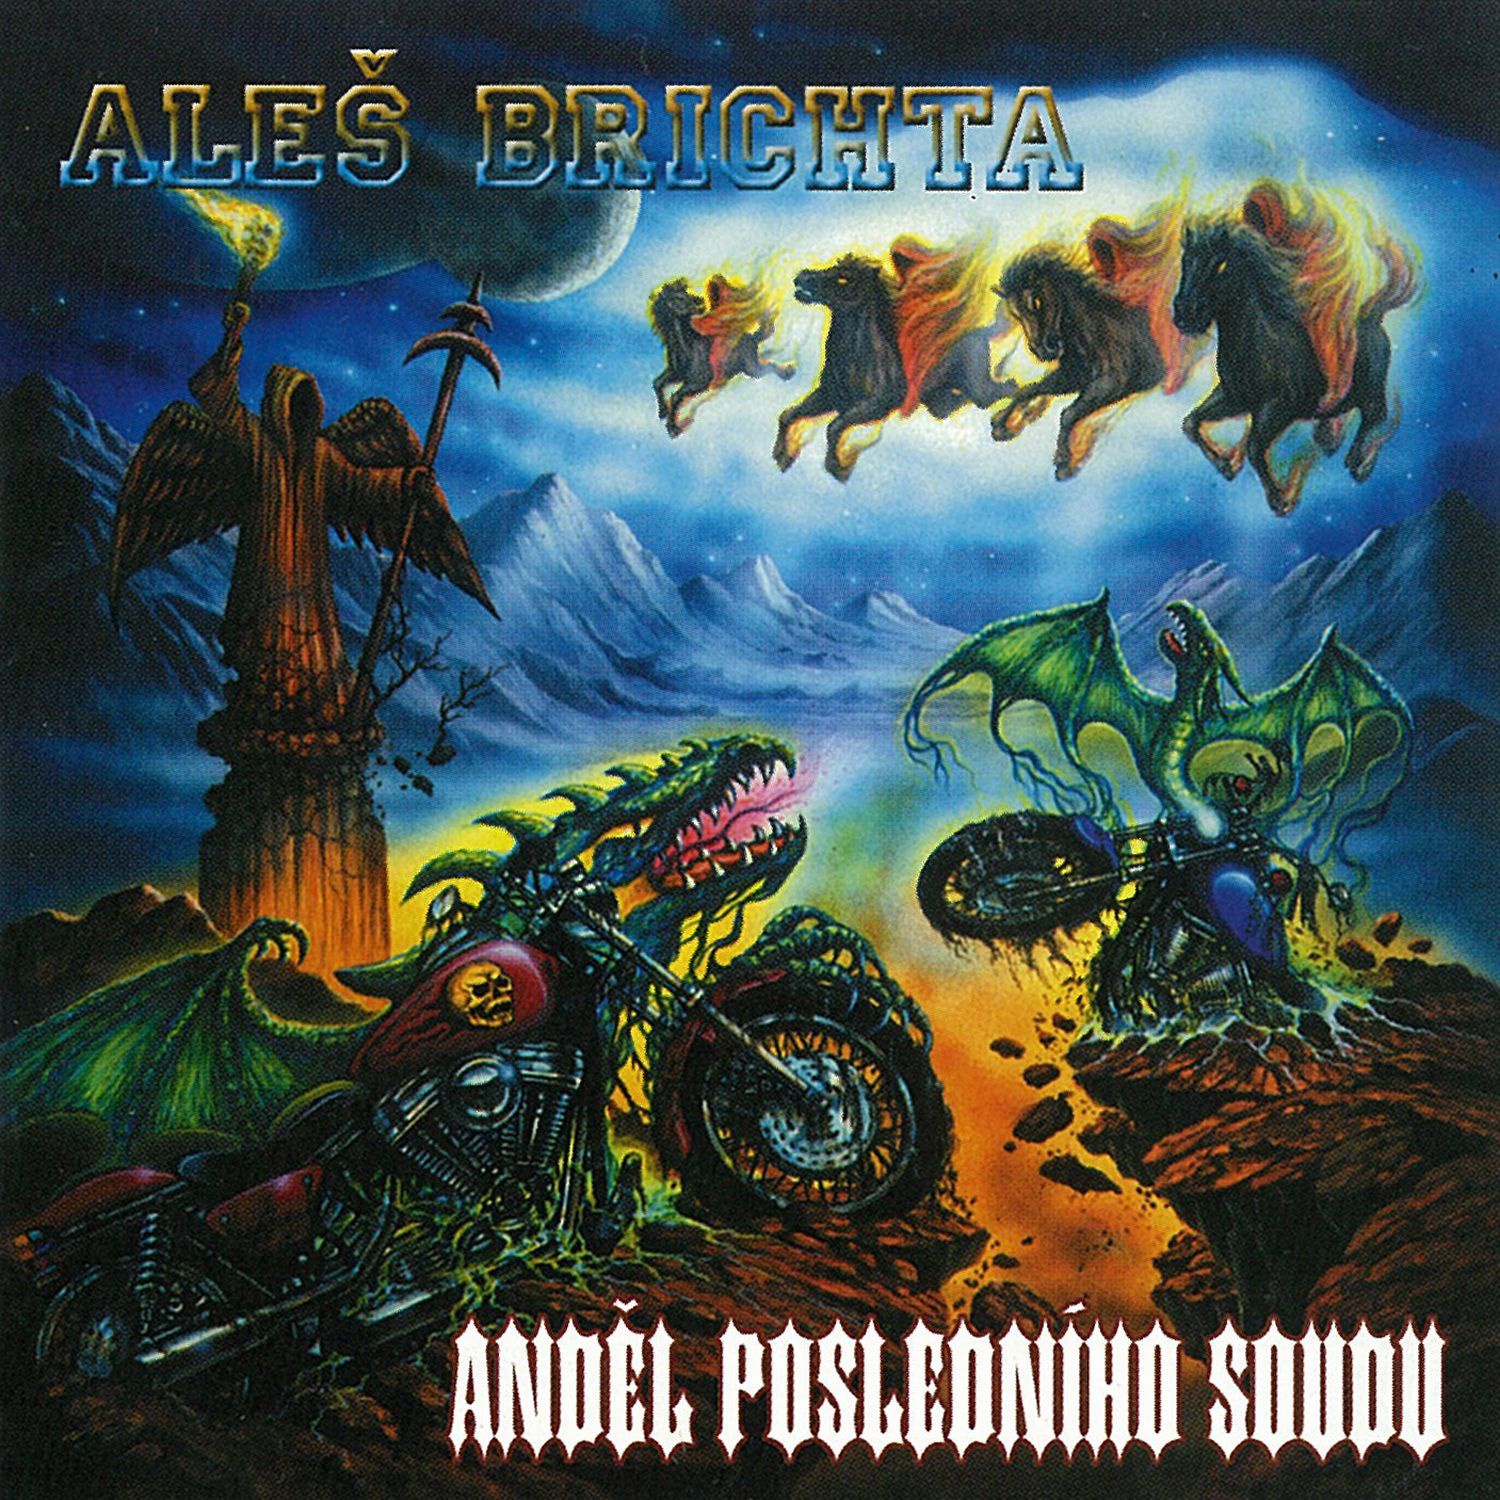 CD Shop - BRICHTA ALES ANDEL POSLEDNIHO SOUDU